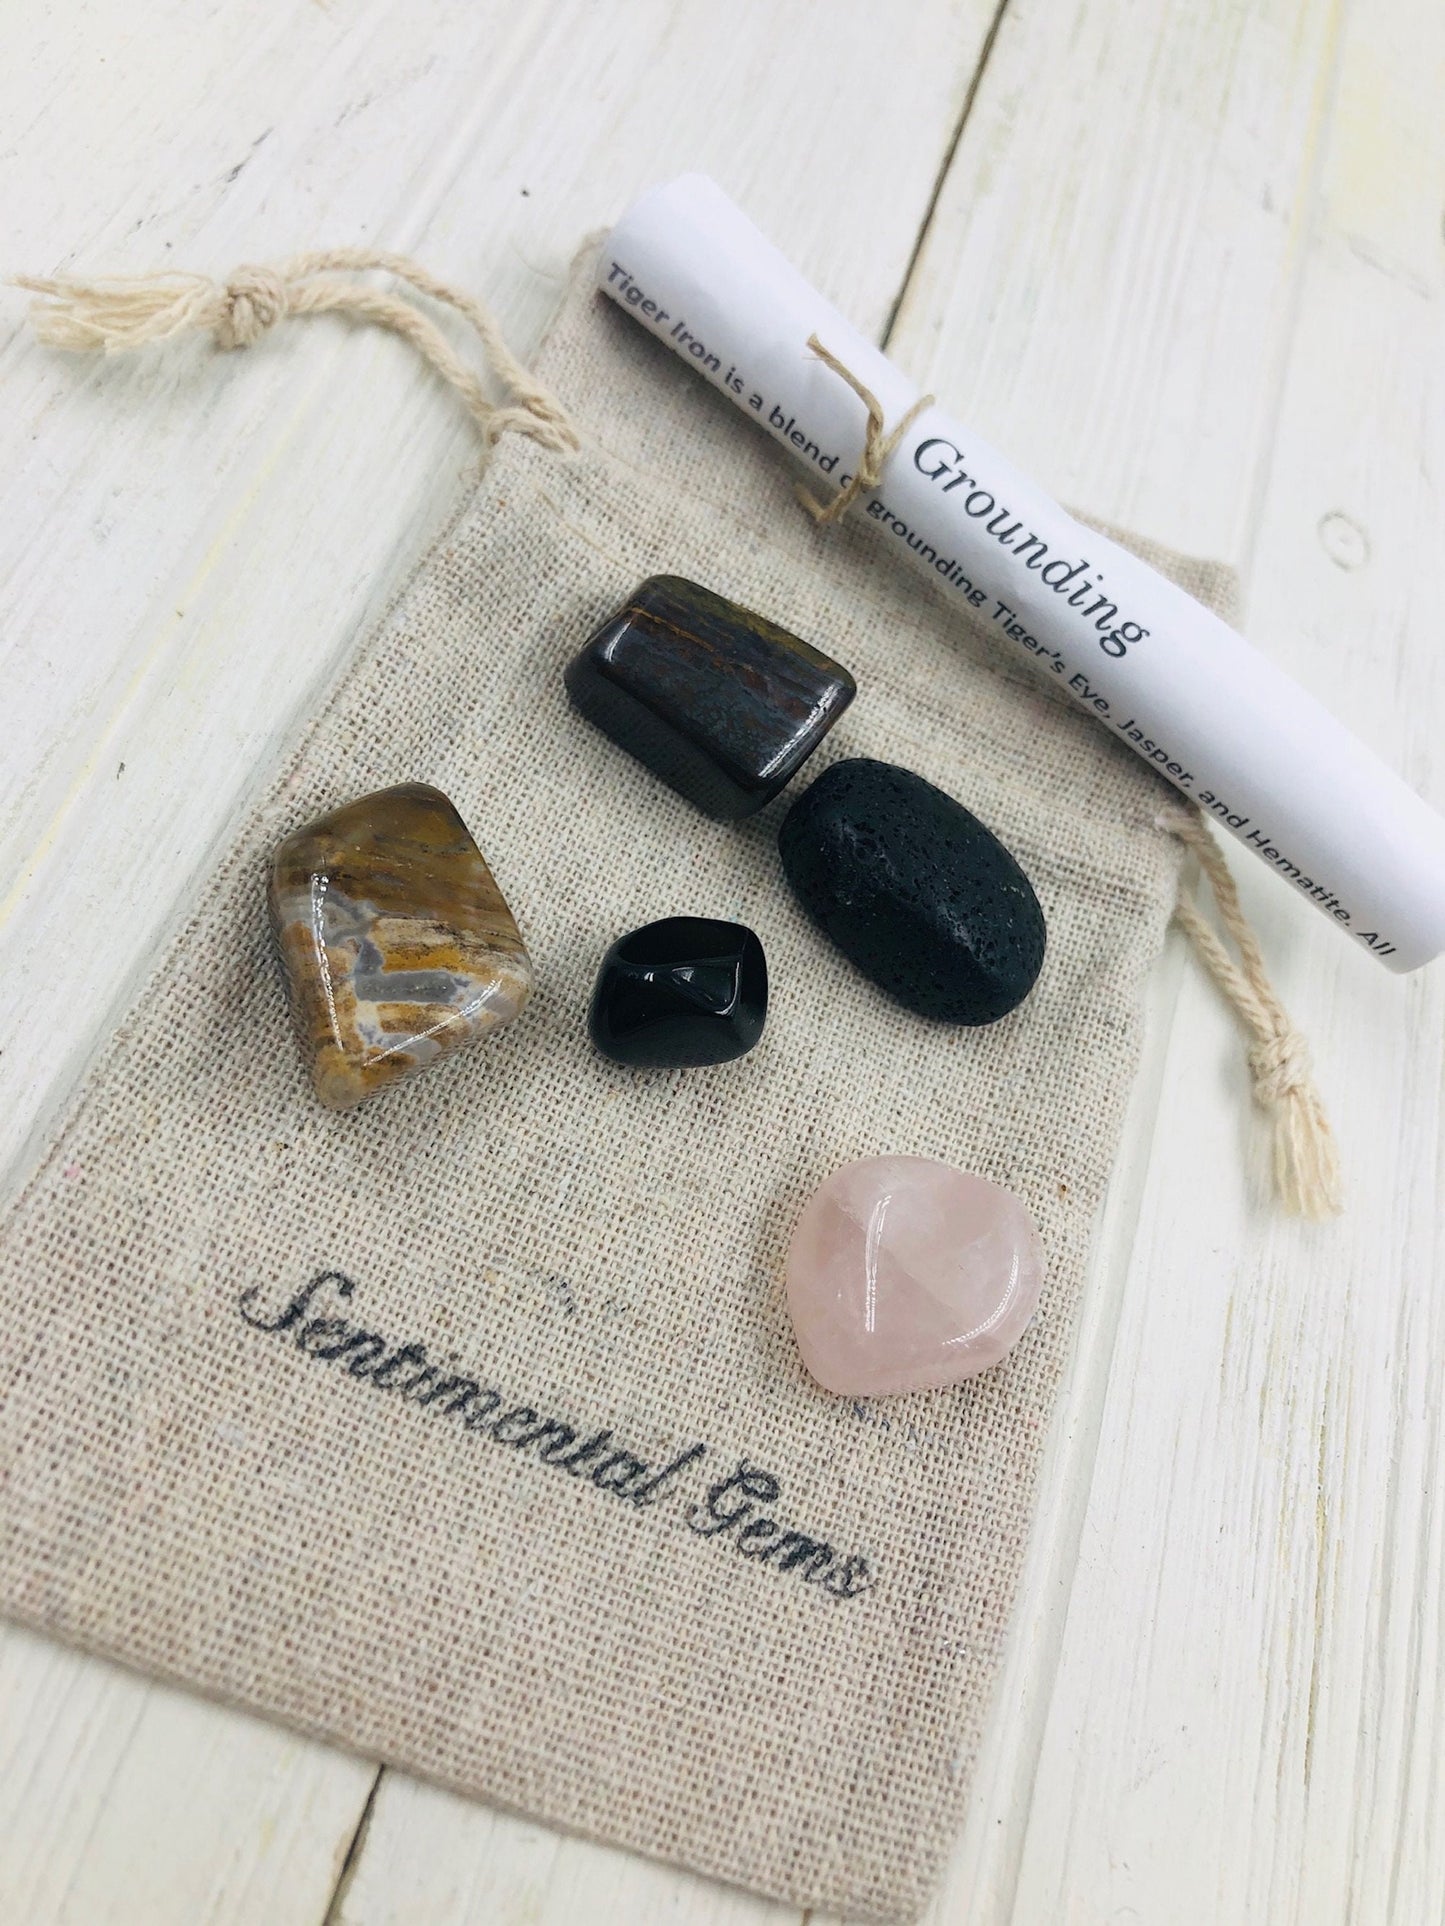 Harmony Grounding Crystal Kit - Affirmation: Balance and Serenity